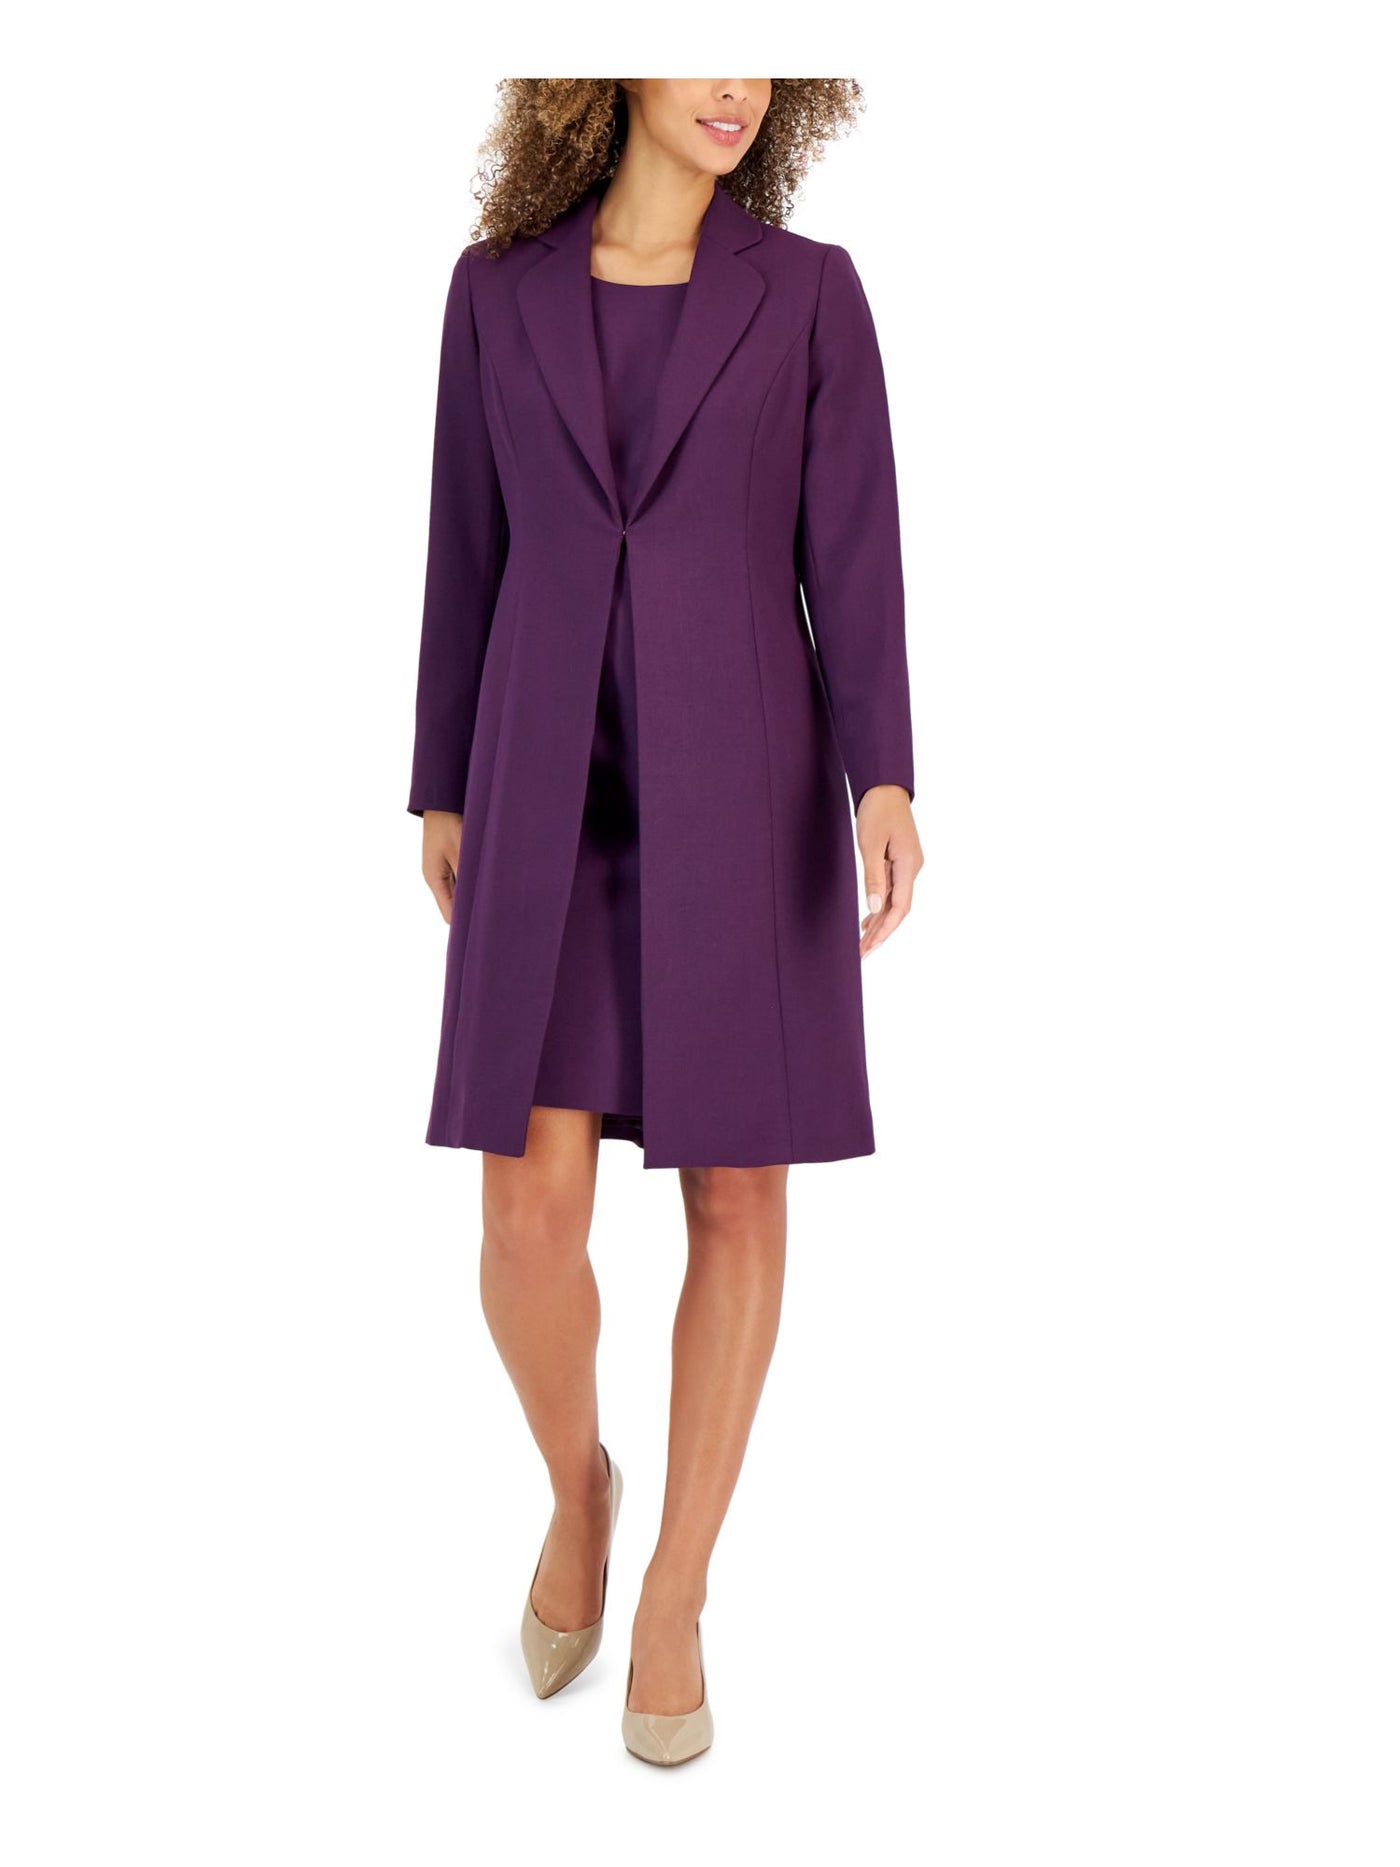 LE SUIT Womens Purple Zippered Slitted Clasp Closure Long Sleeve Blazer Sleeveless Scoop Neck Knee Length Wear To Work Sheath Dress 8